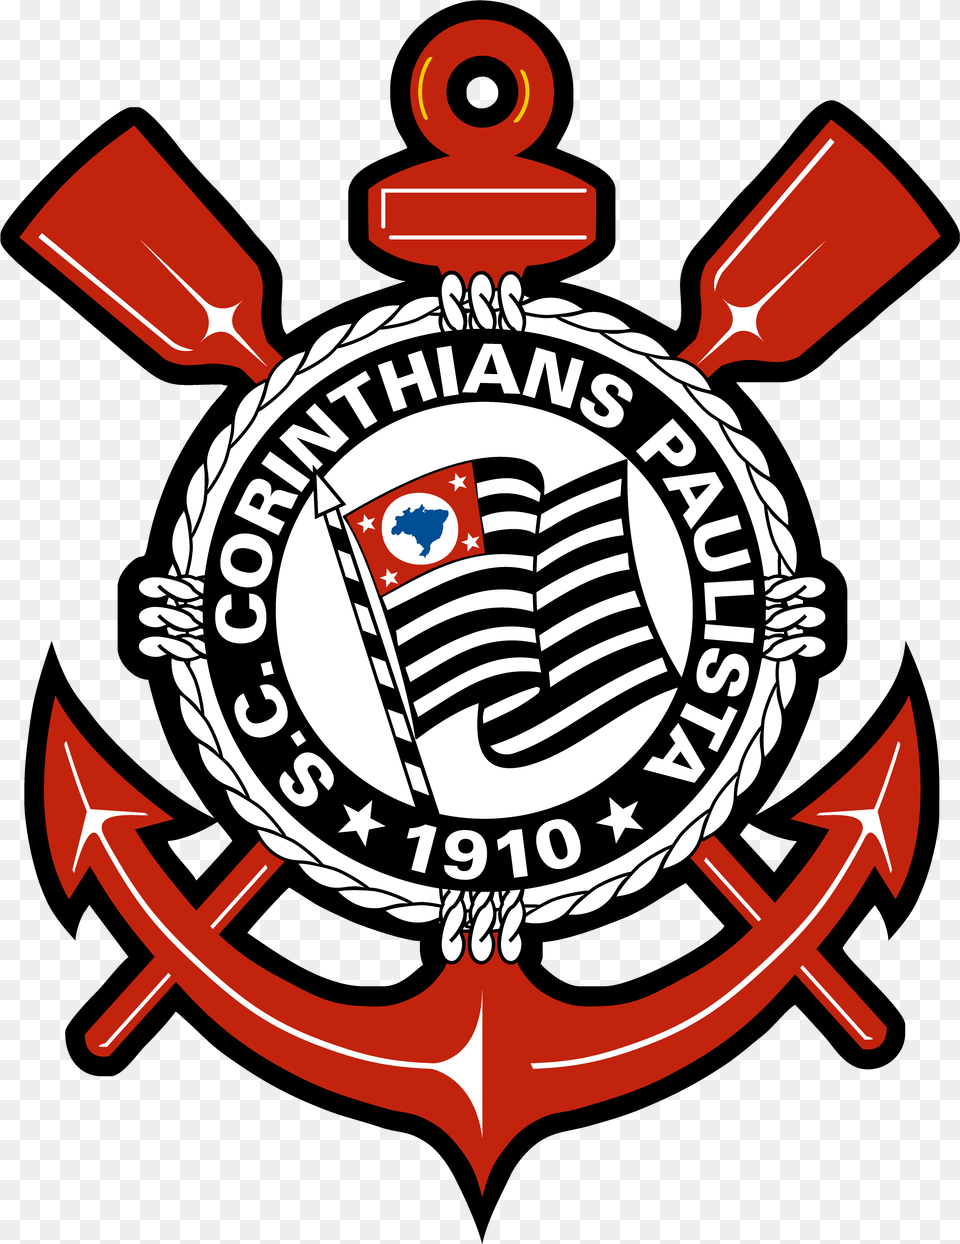 Logo Corinthians Escudo Do Corinthians Em, Electronics, Emblem, Hardware, Symbol Free Png